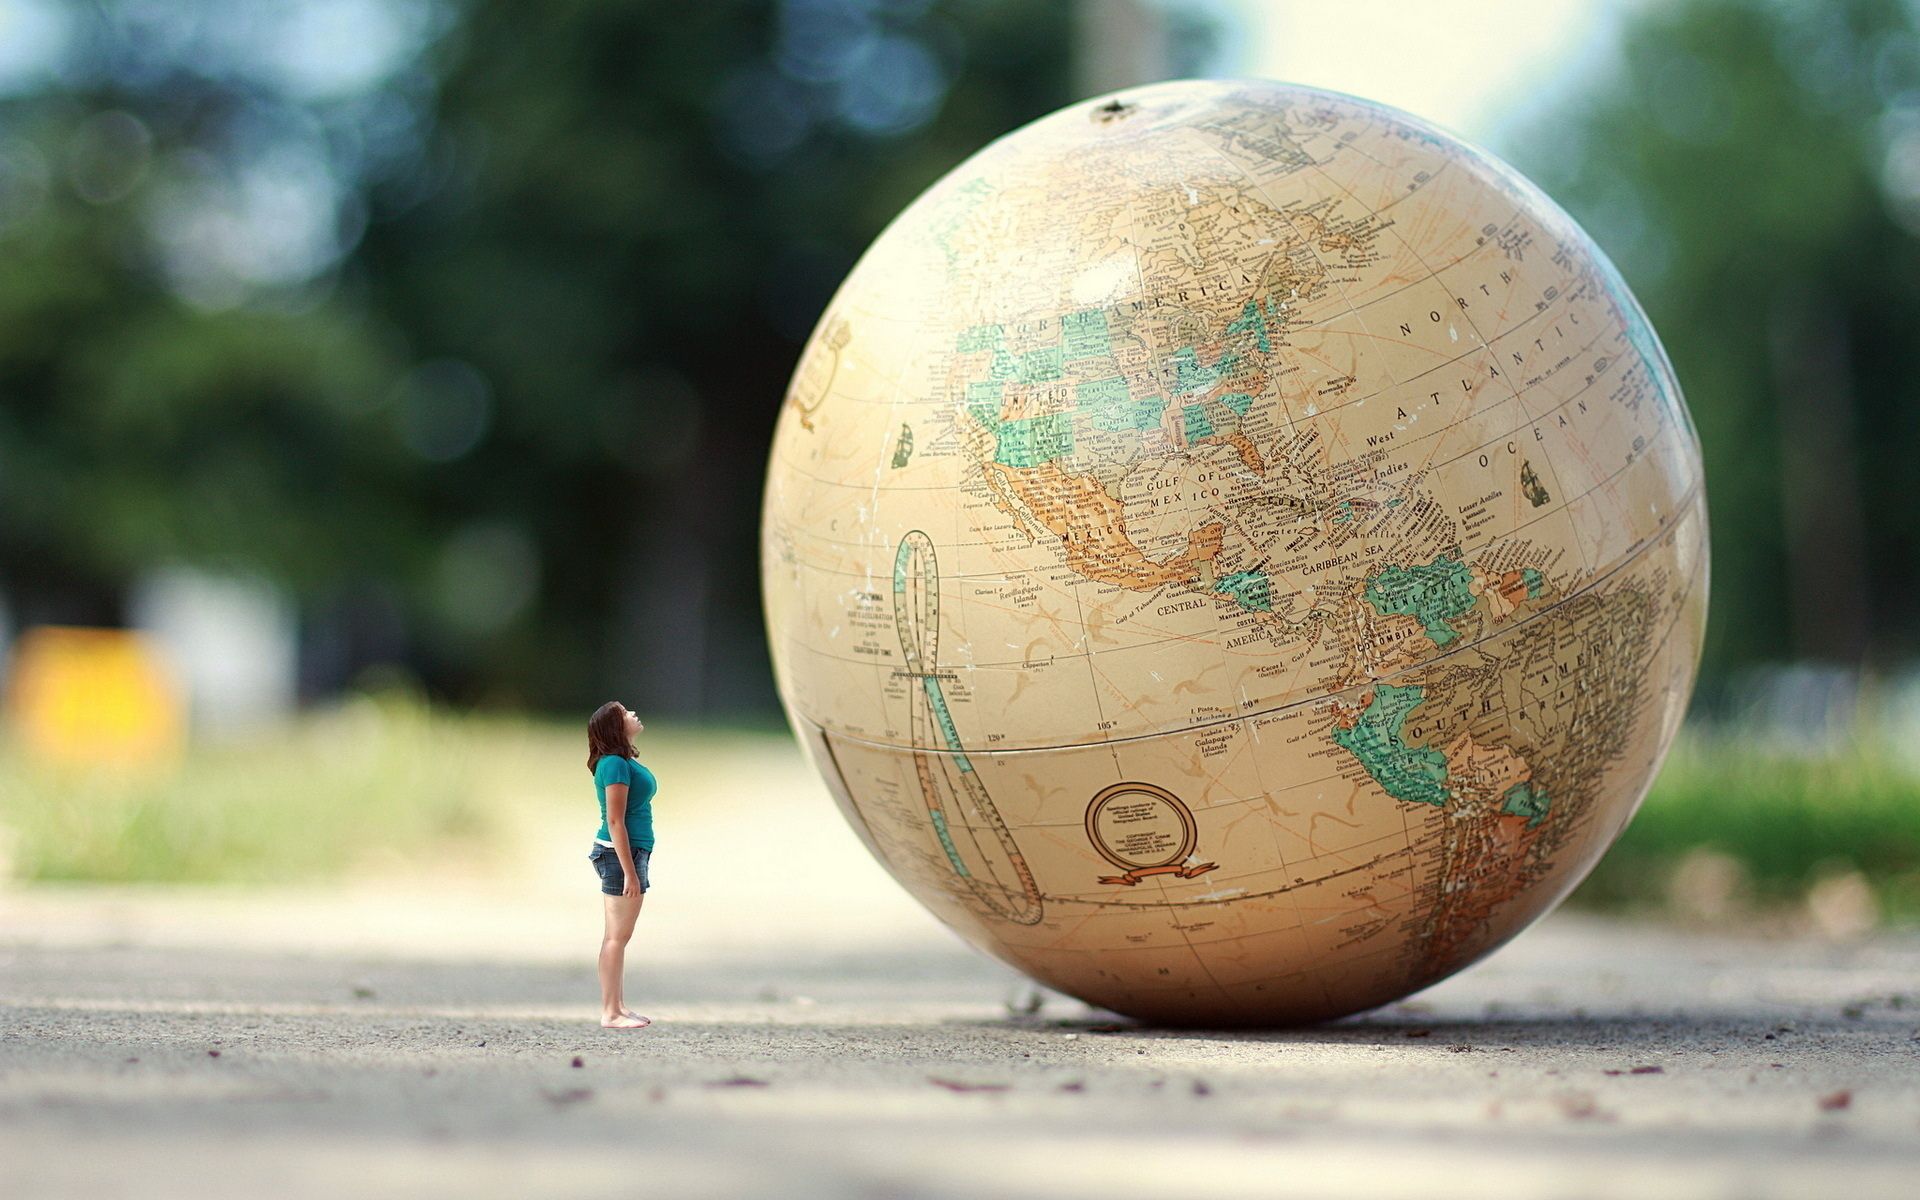 Manip earth globe sphere map women humor mood travel situation